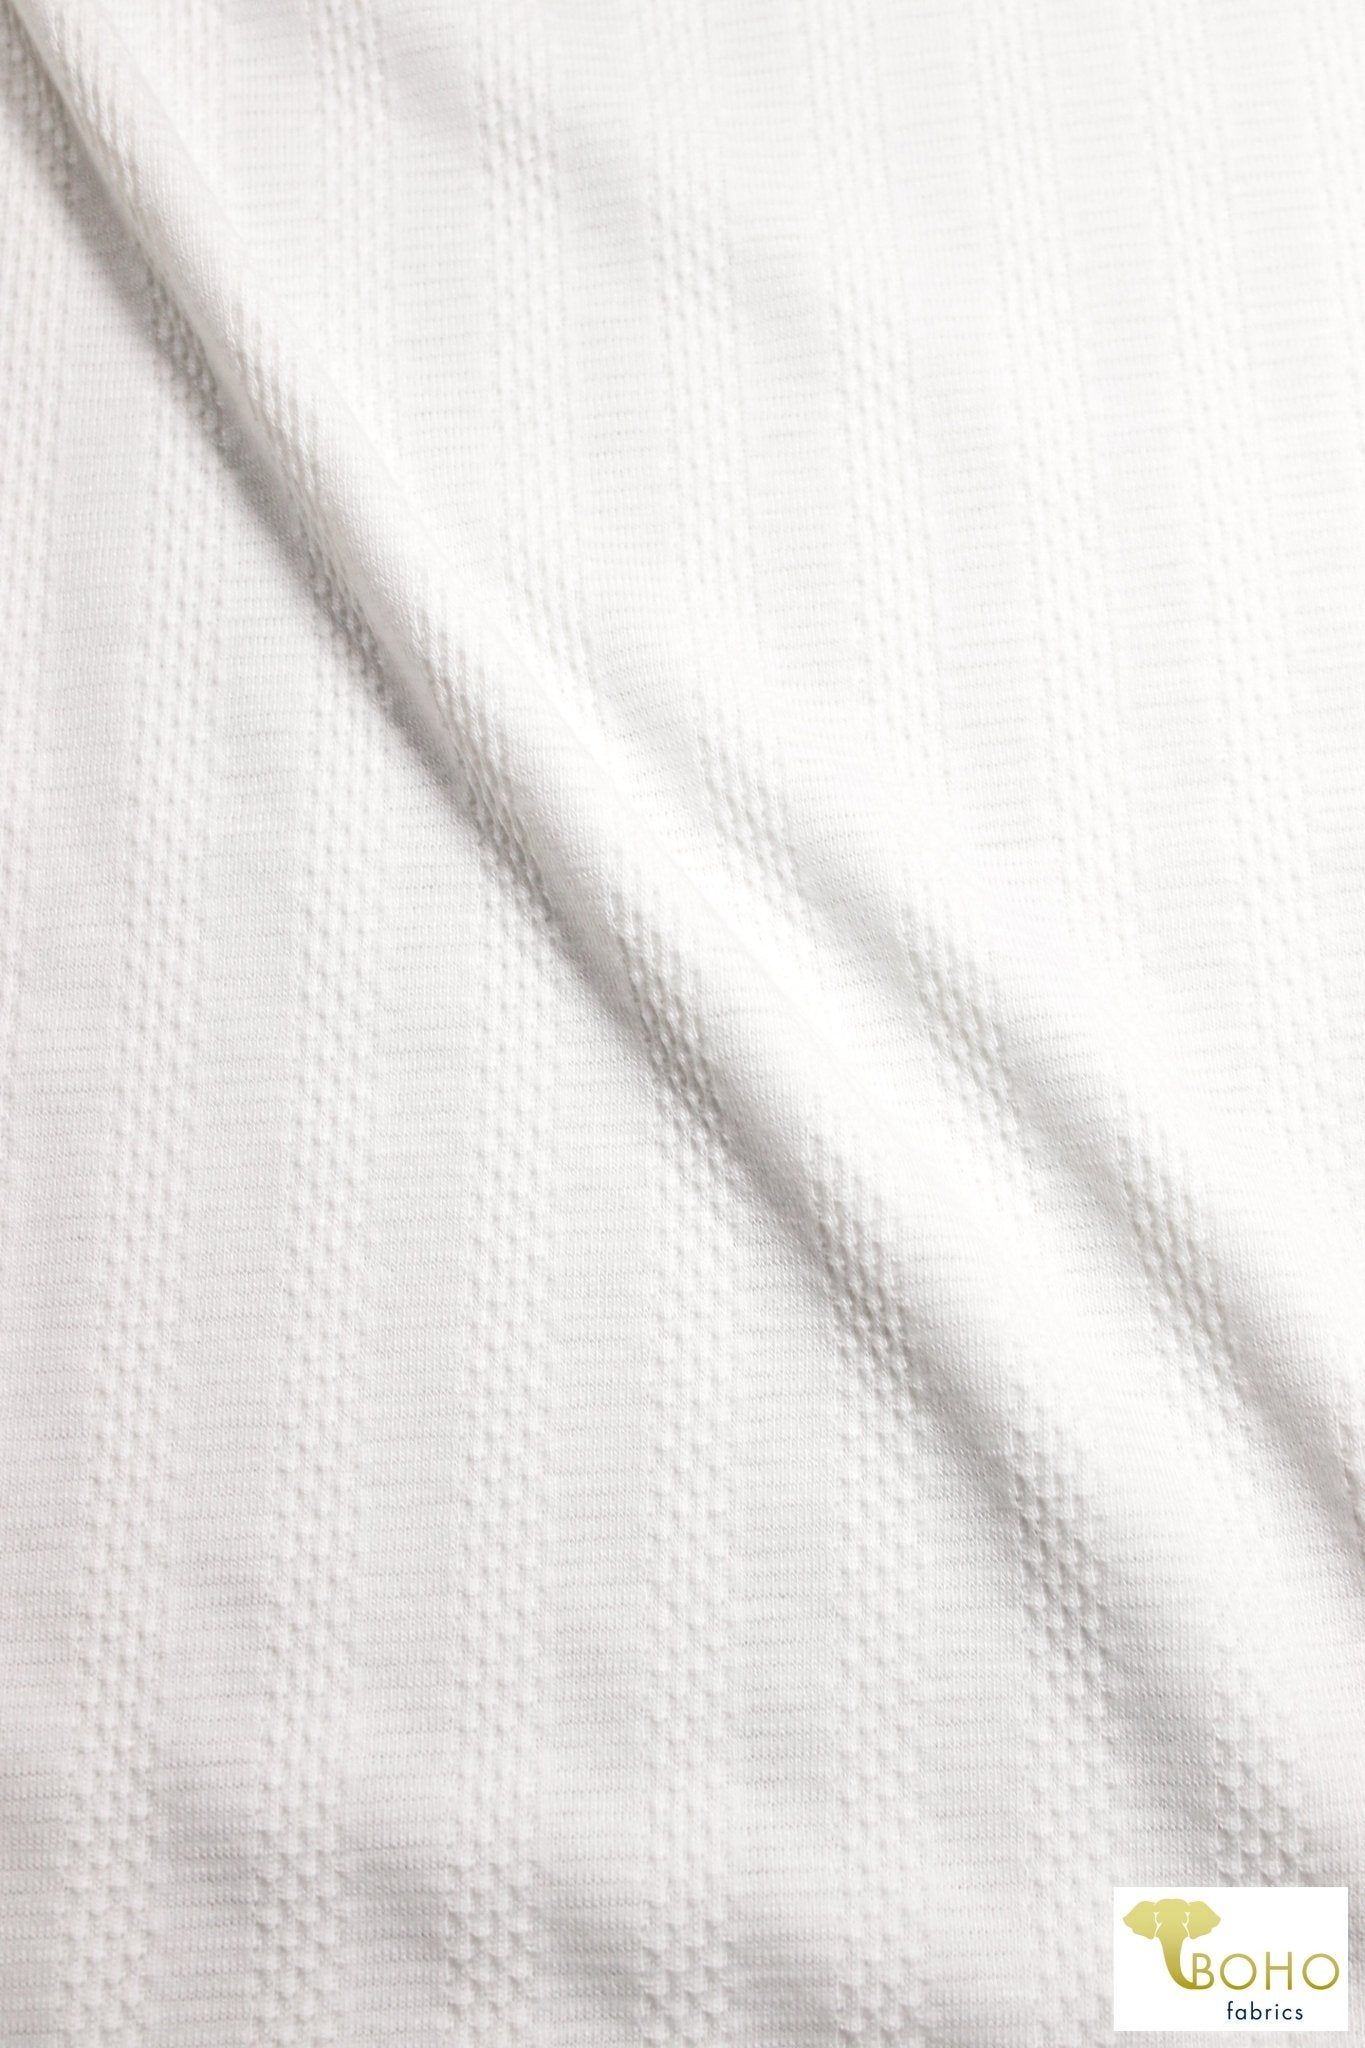 Stitched Stripes in White, Pointelle Rib Knit. RIB-129-WHT - Boho Fabrics